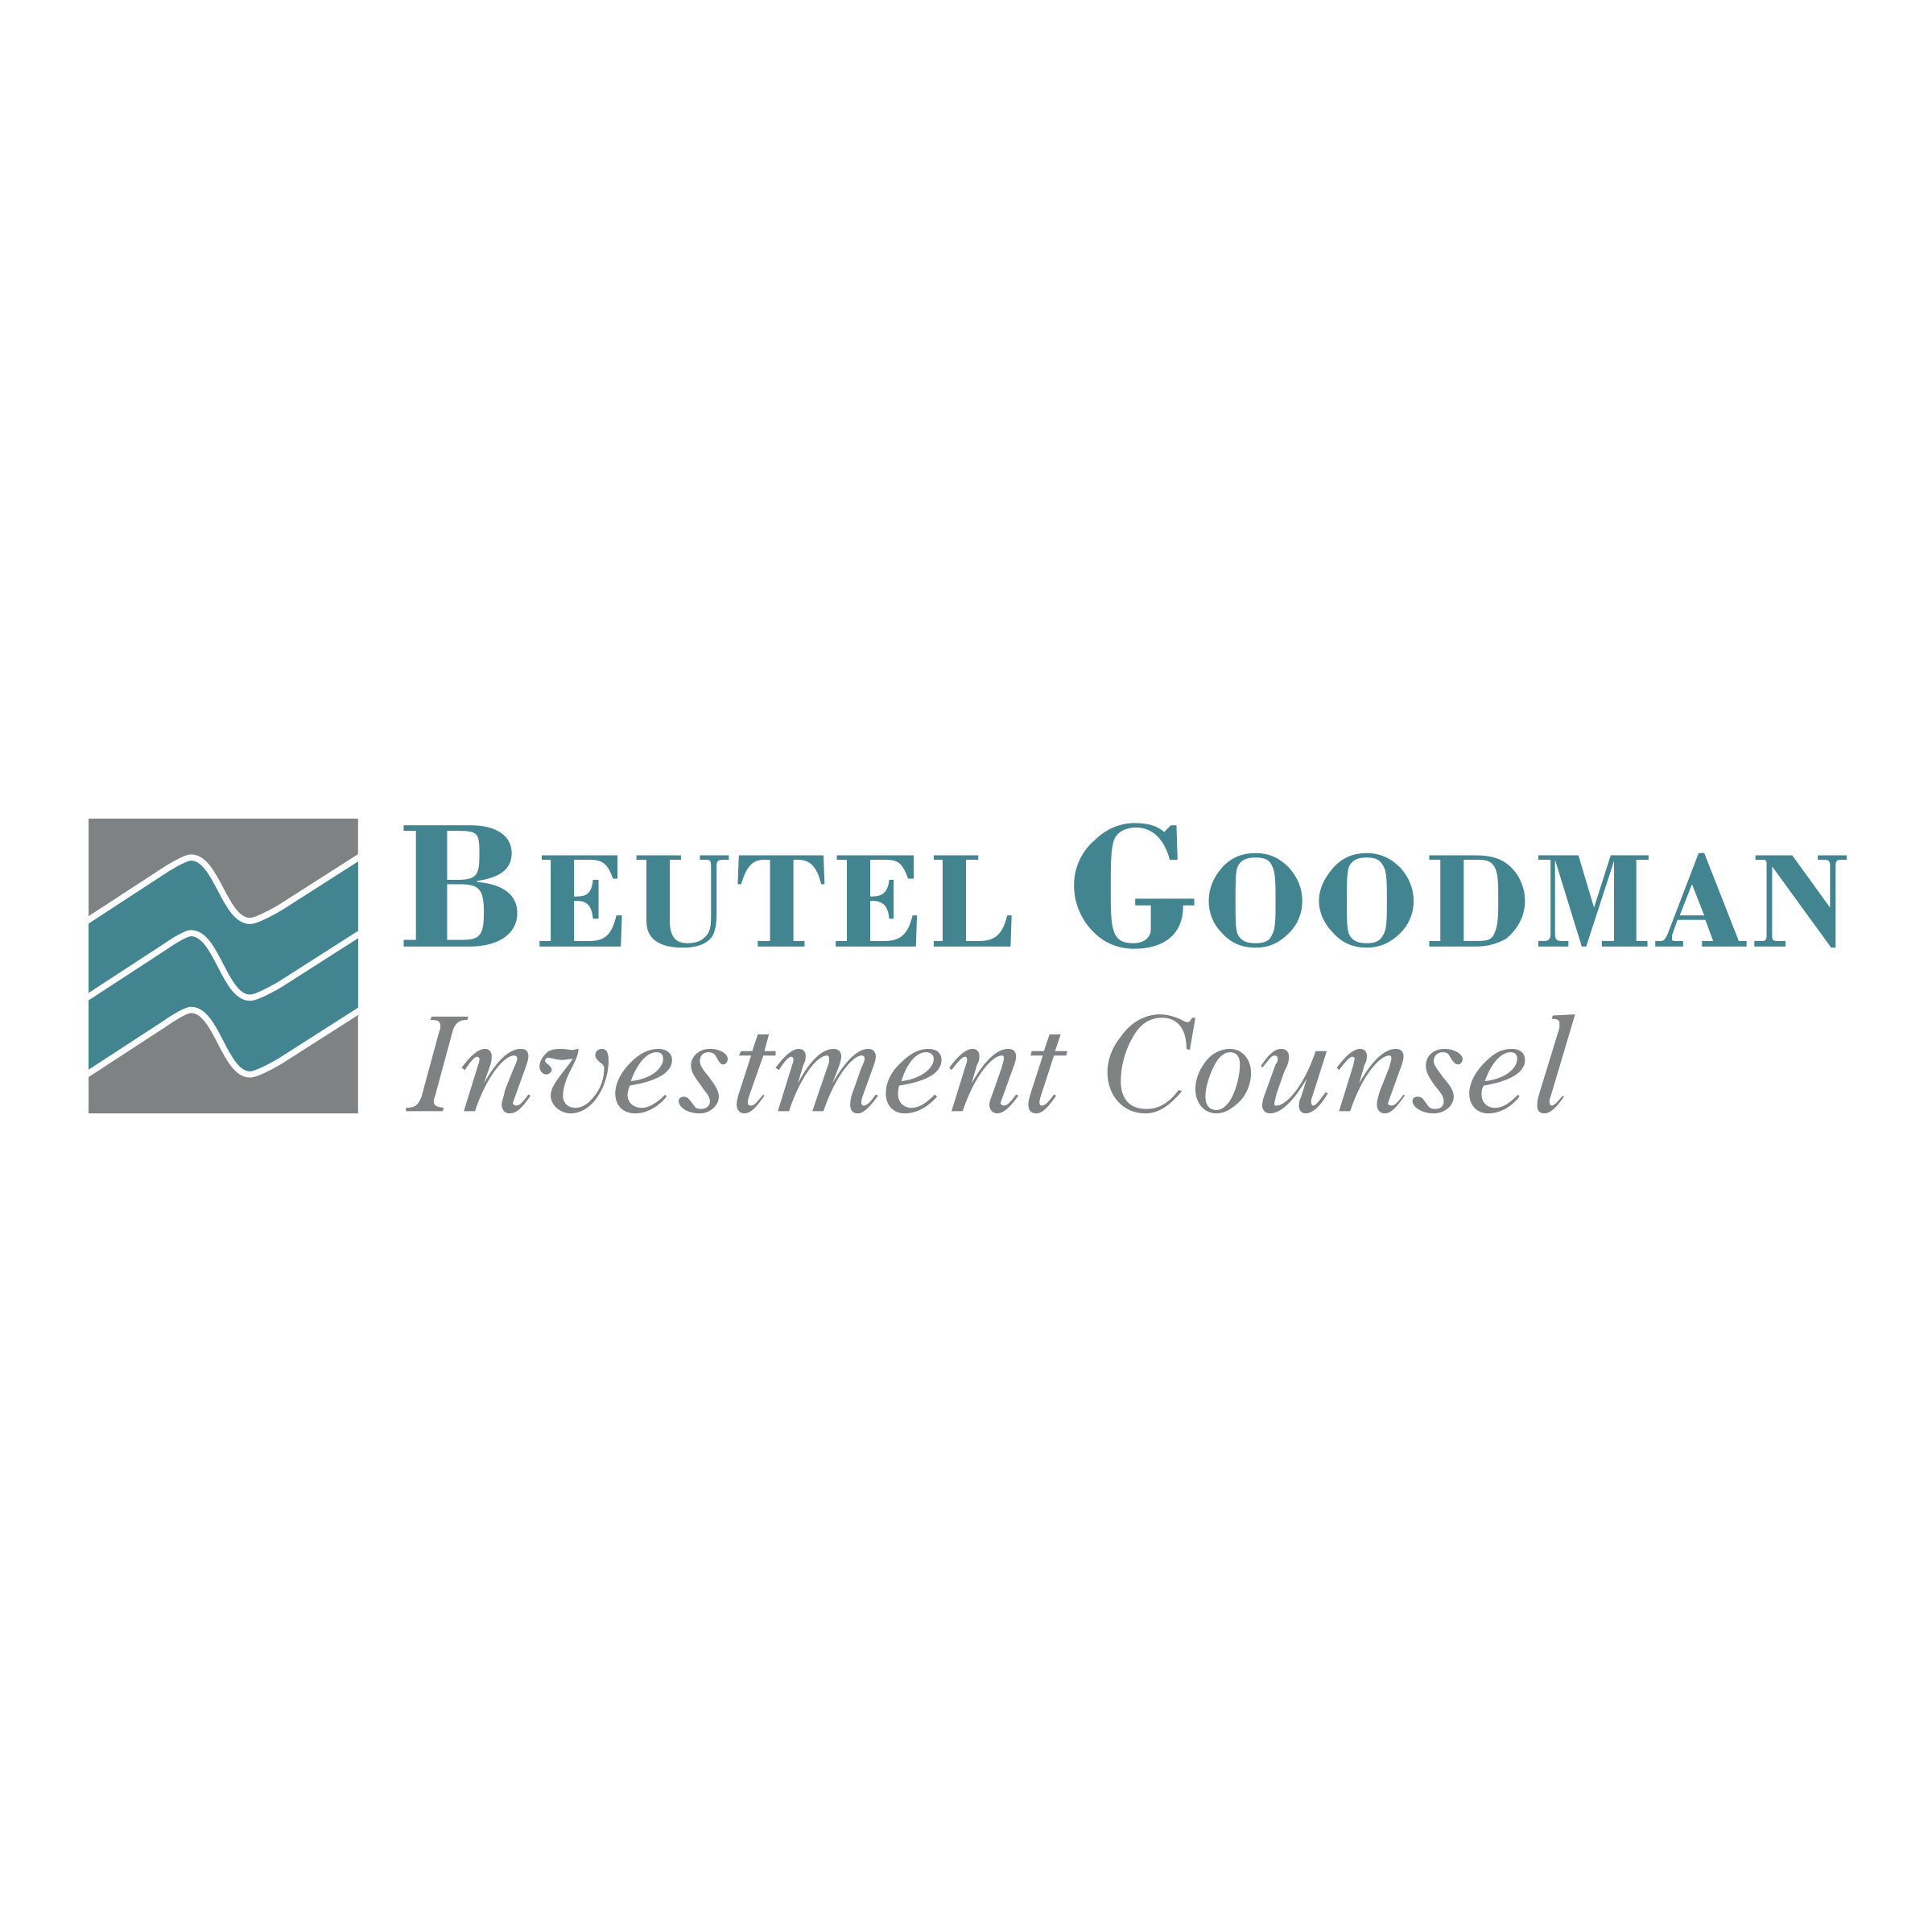 Goodman Logo - Beutel Goodman Logo PNG Transparent & SVG Vector